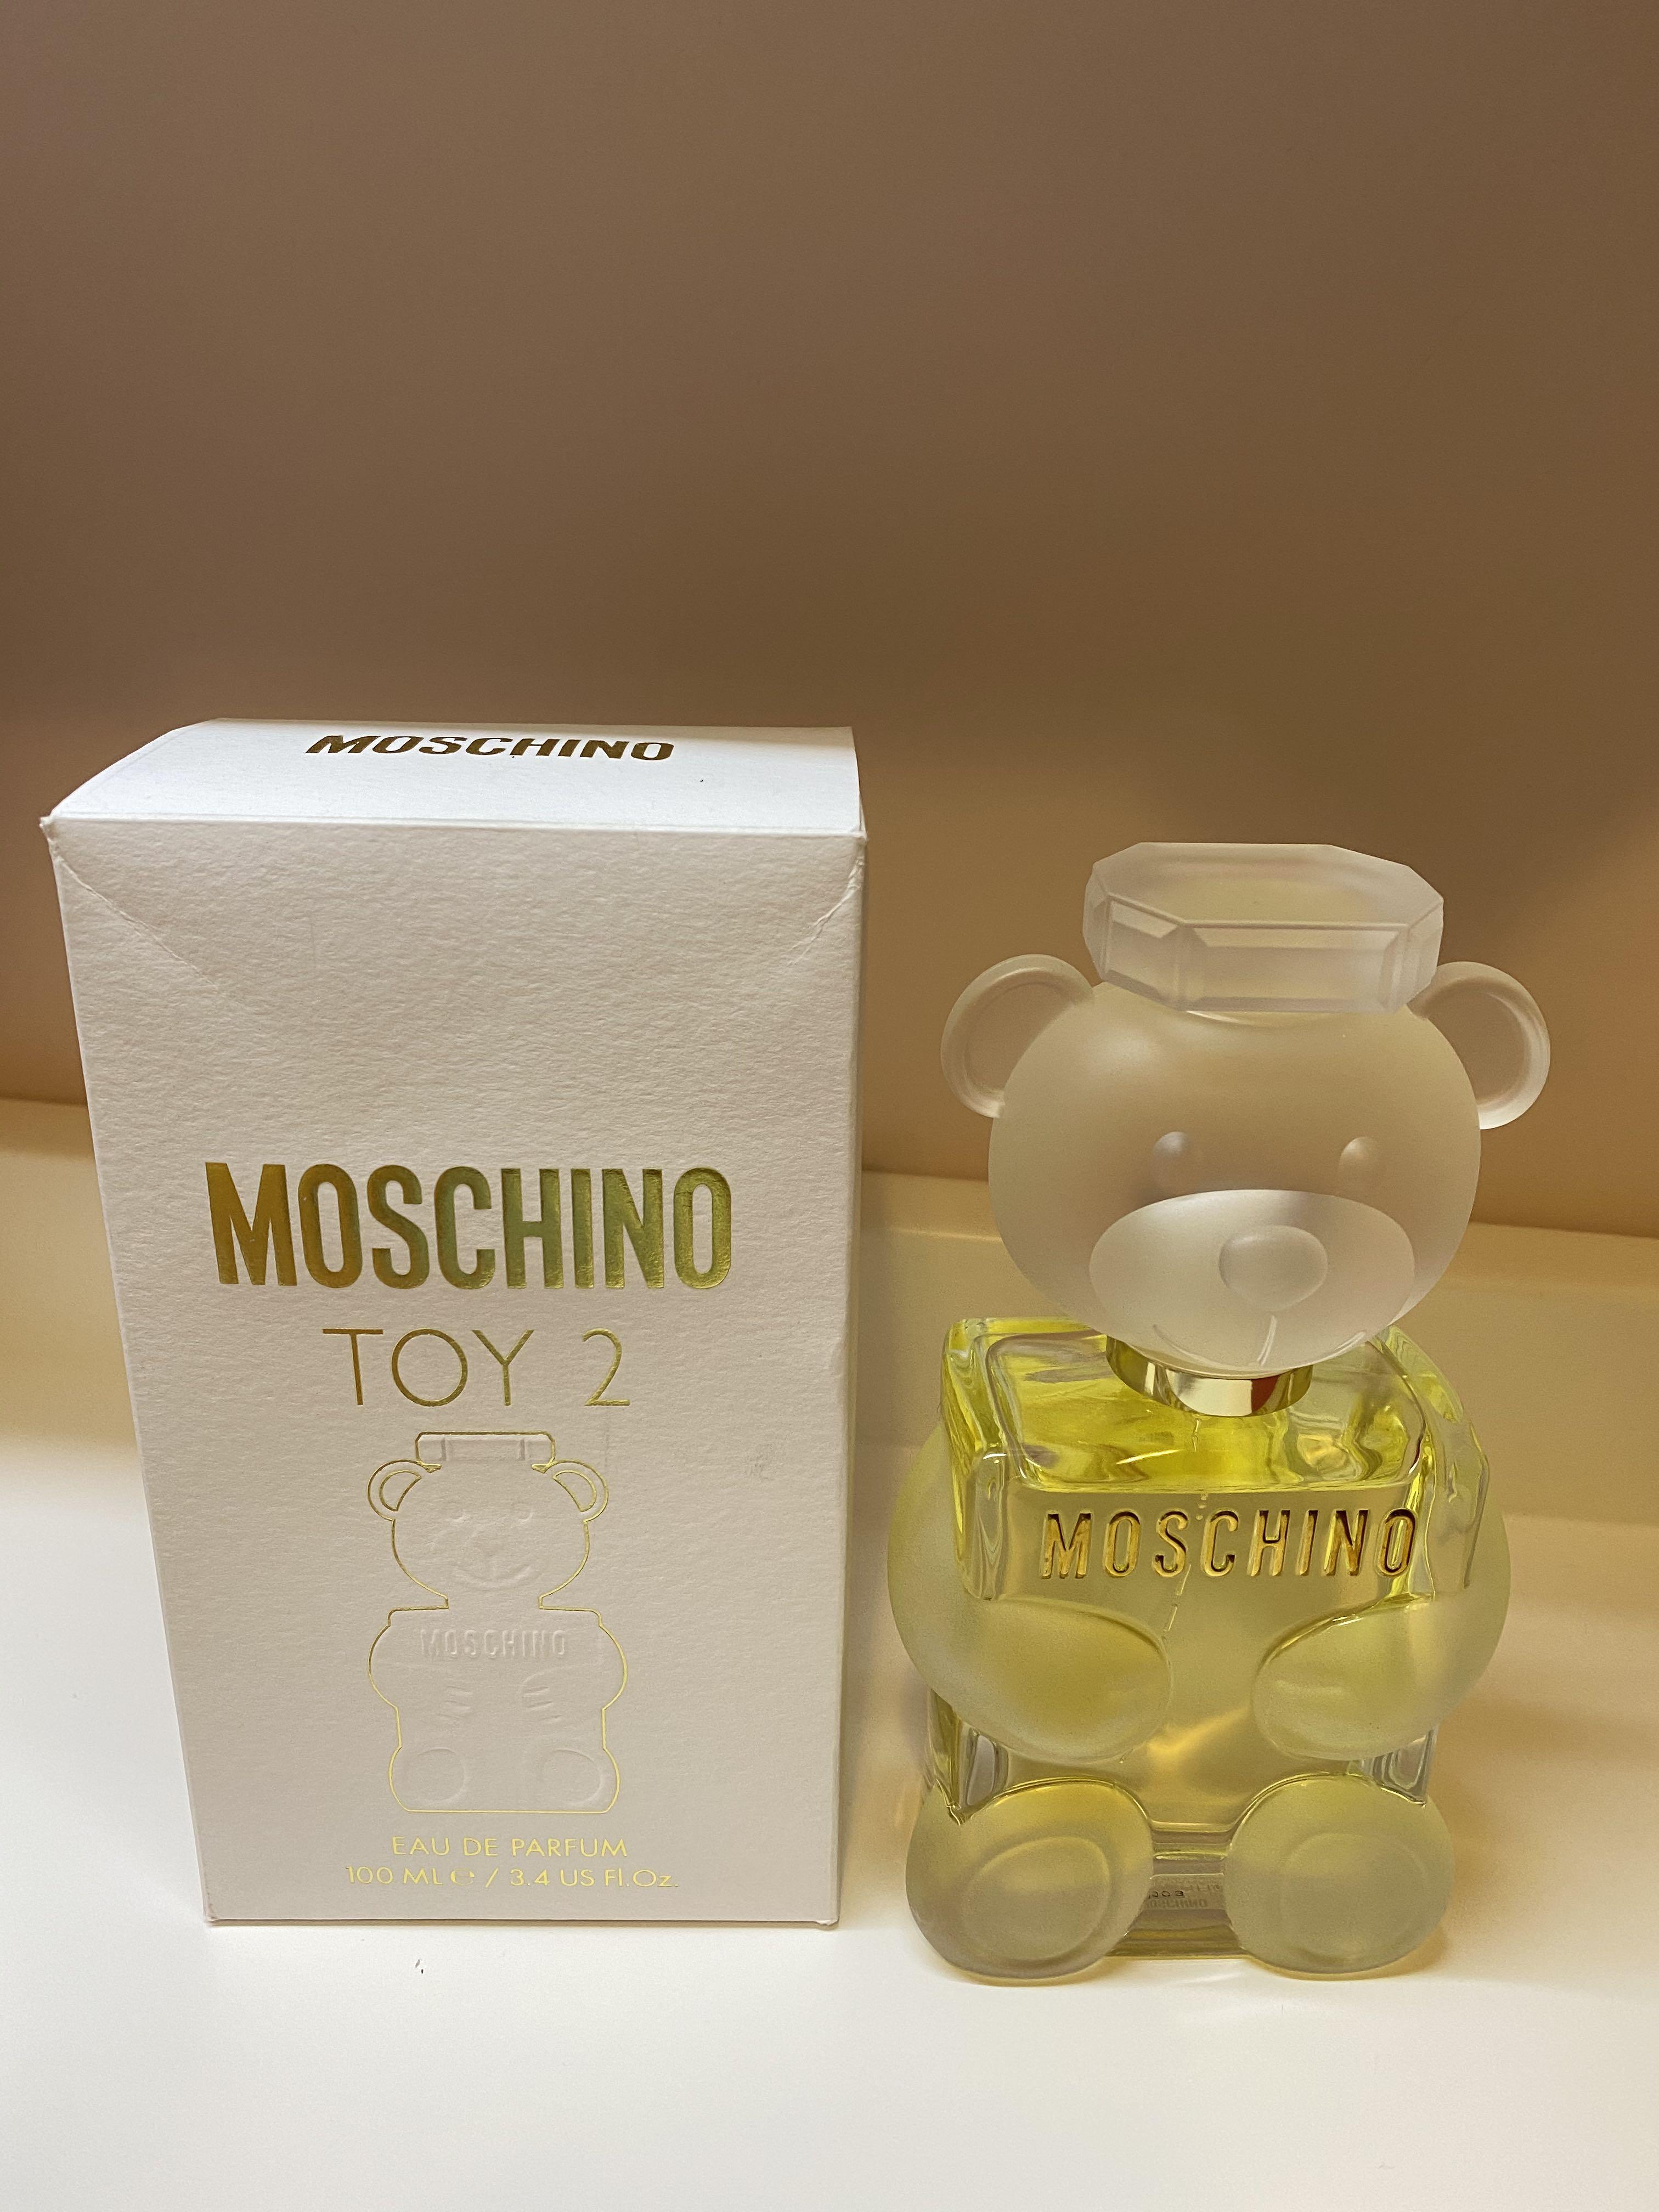 moschino toy 2 perfume 100ml